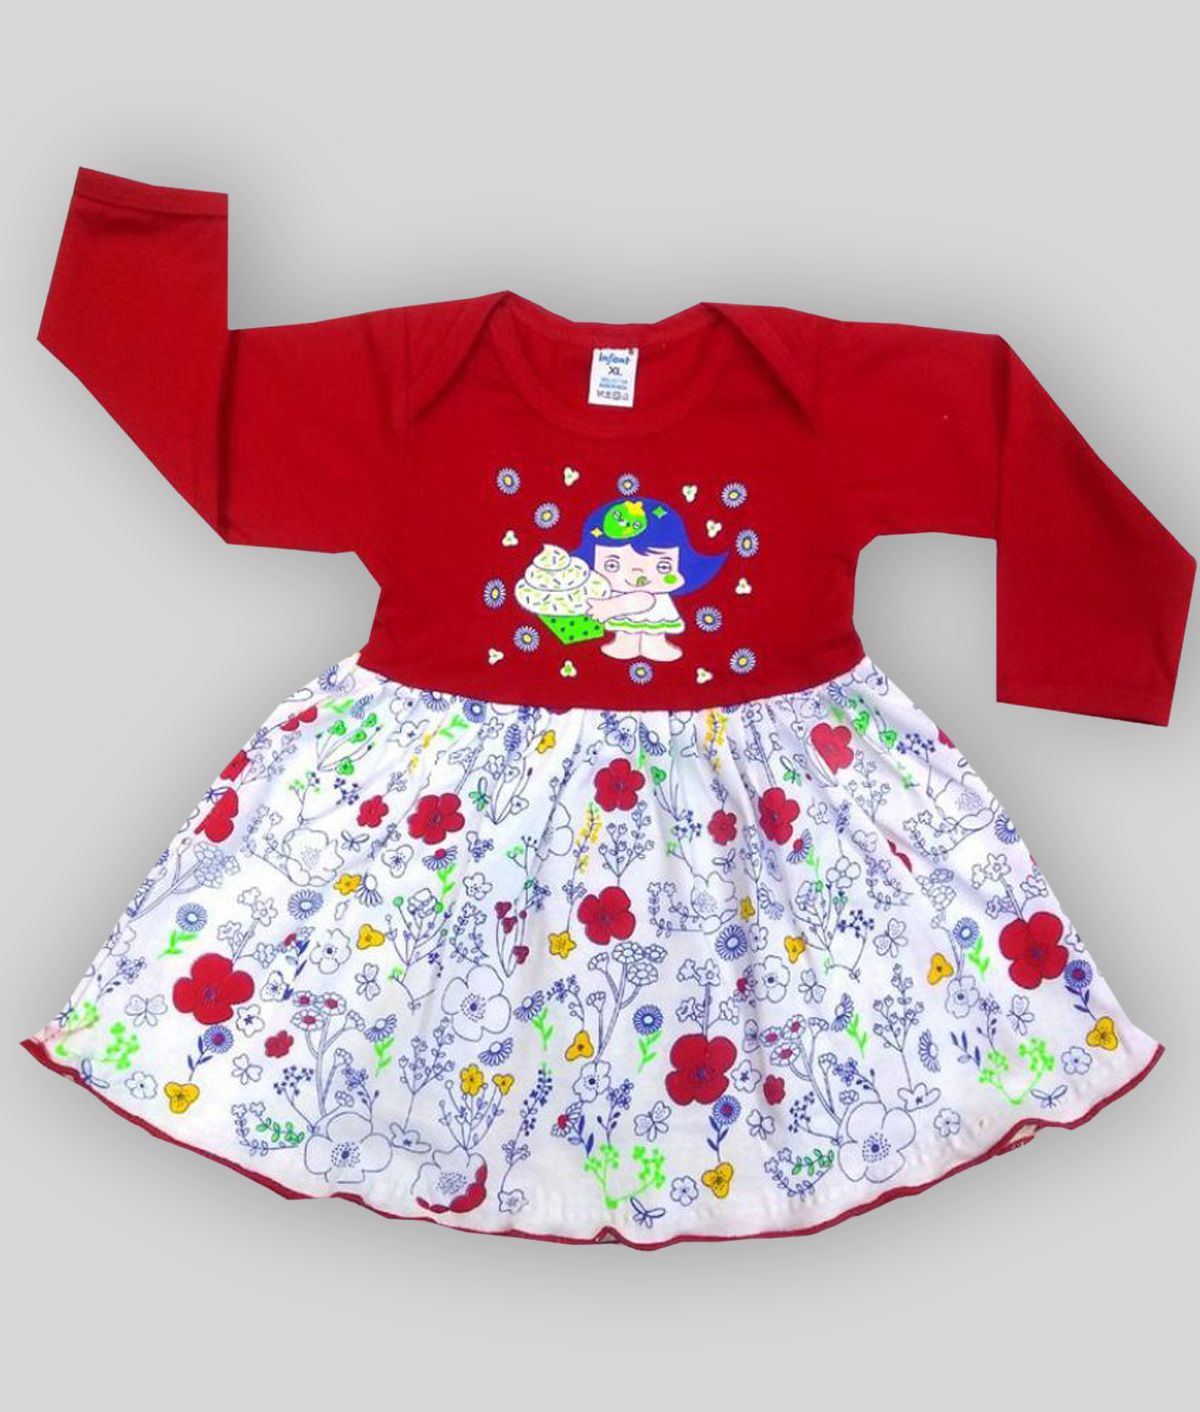     			INFANT  Baby Girls Full Midi/Knee Length Casual frock Dress.(Red)